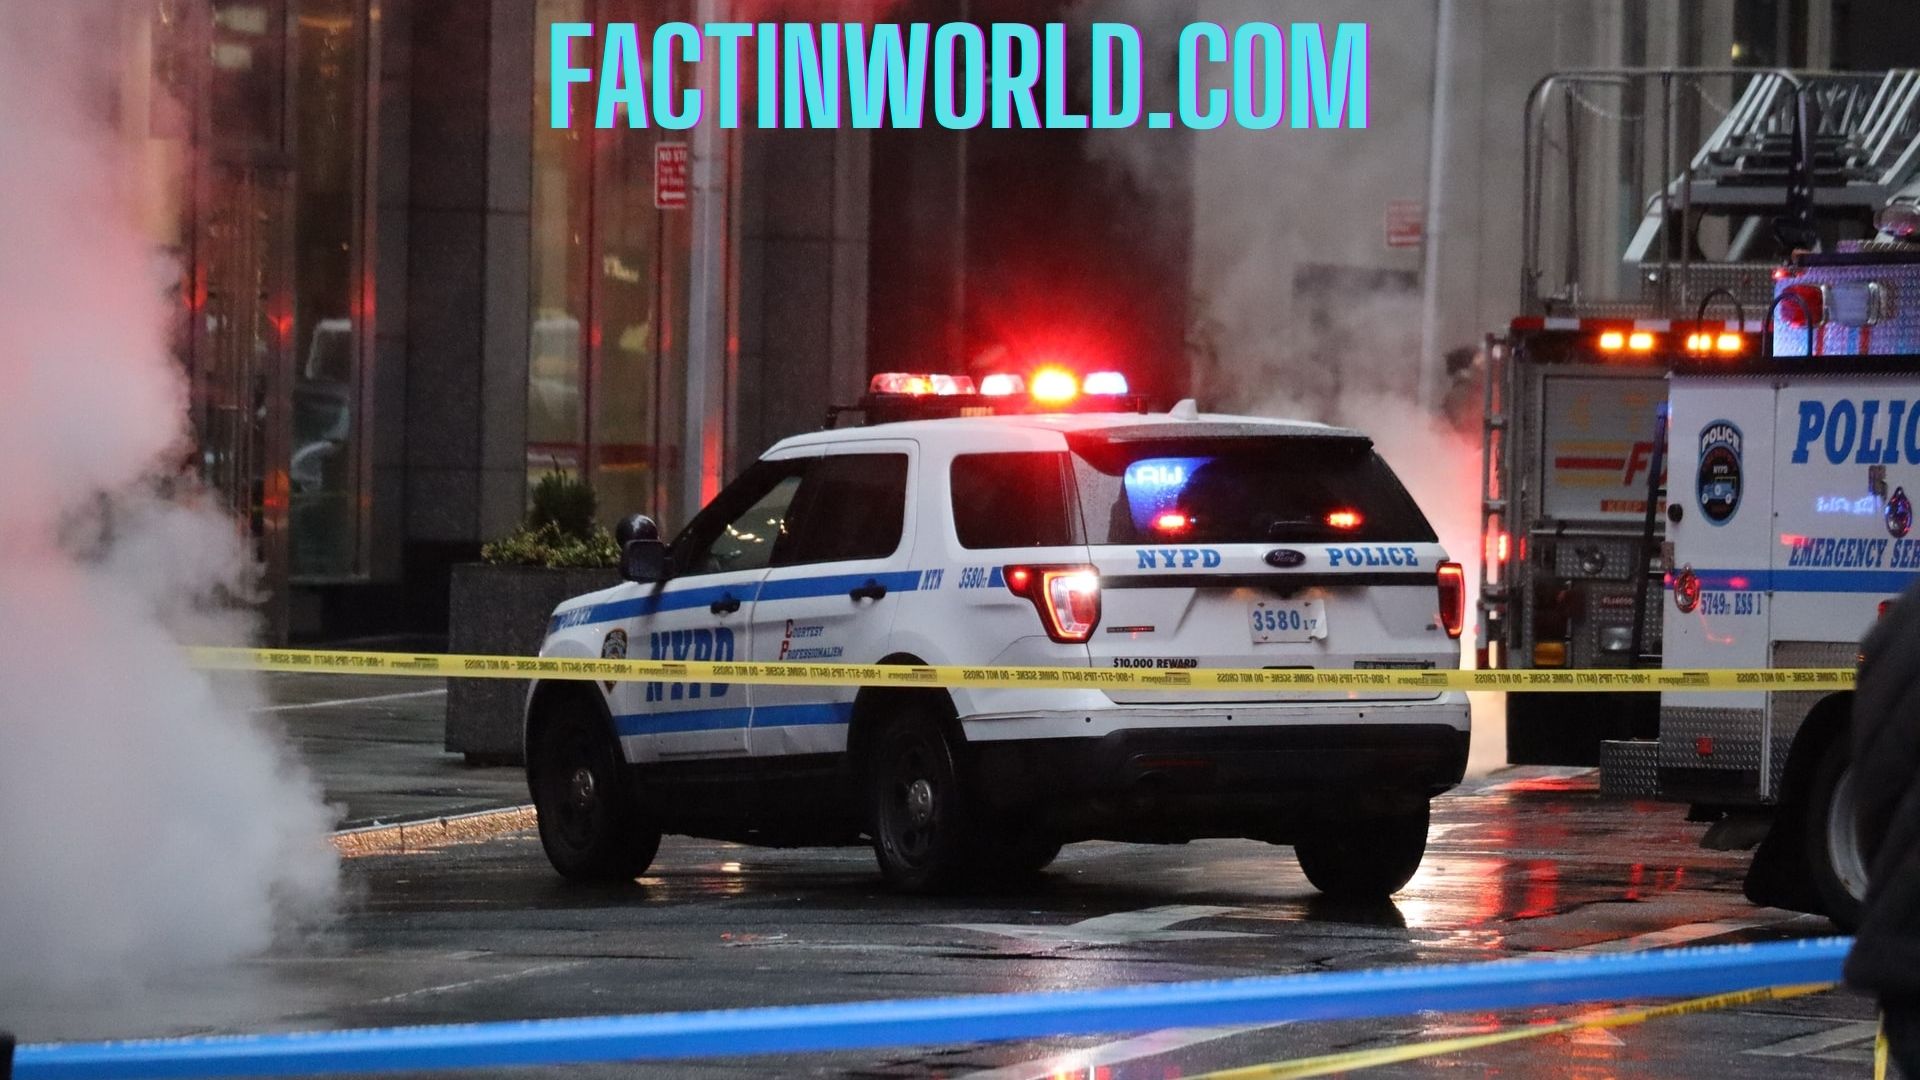 factinwolrd.com crime most dangerous cities in the us for 2021 (whats the most dangerous city in the us)